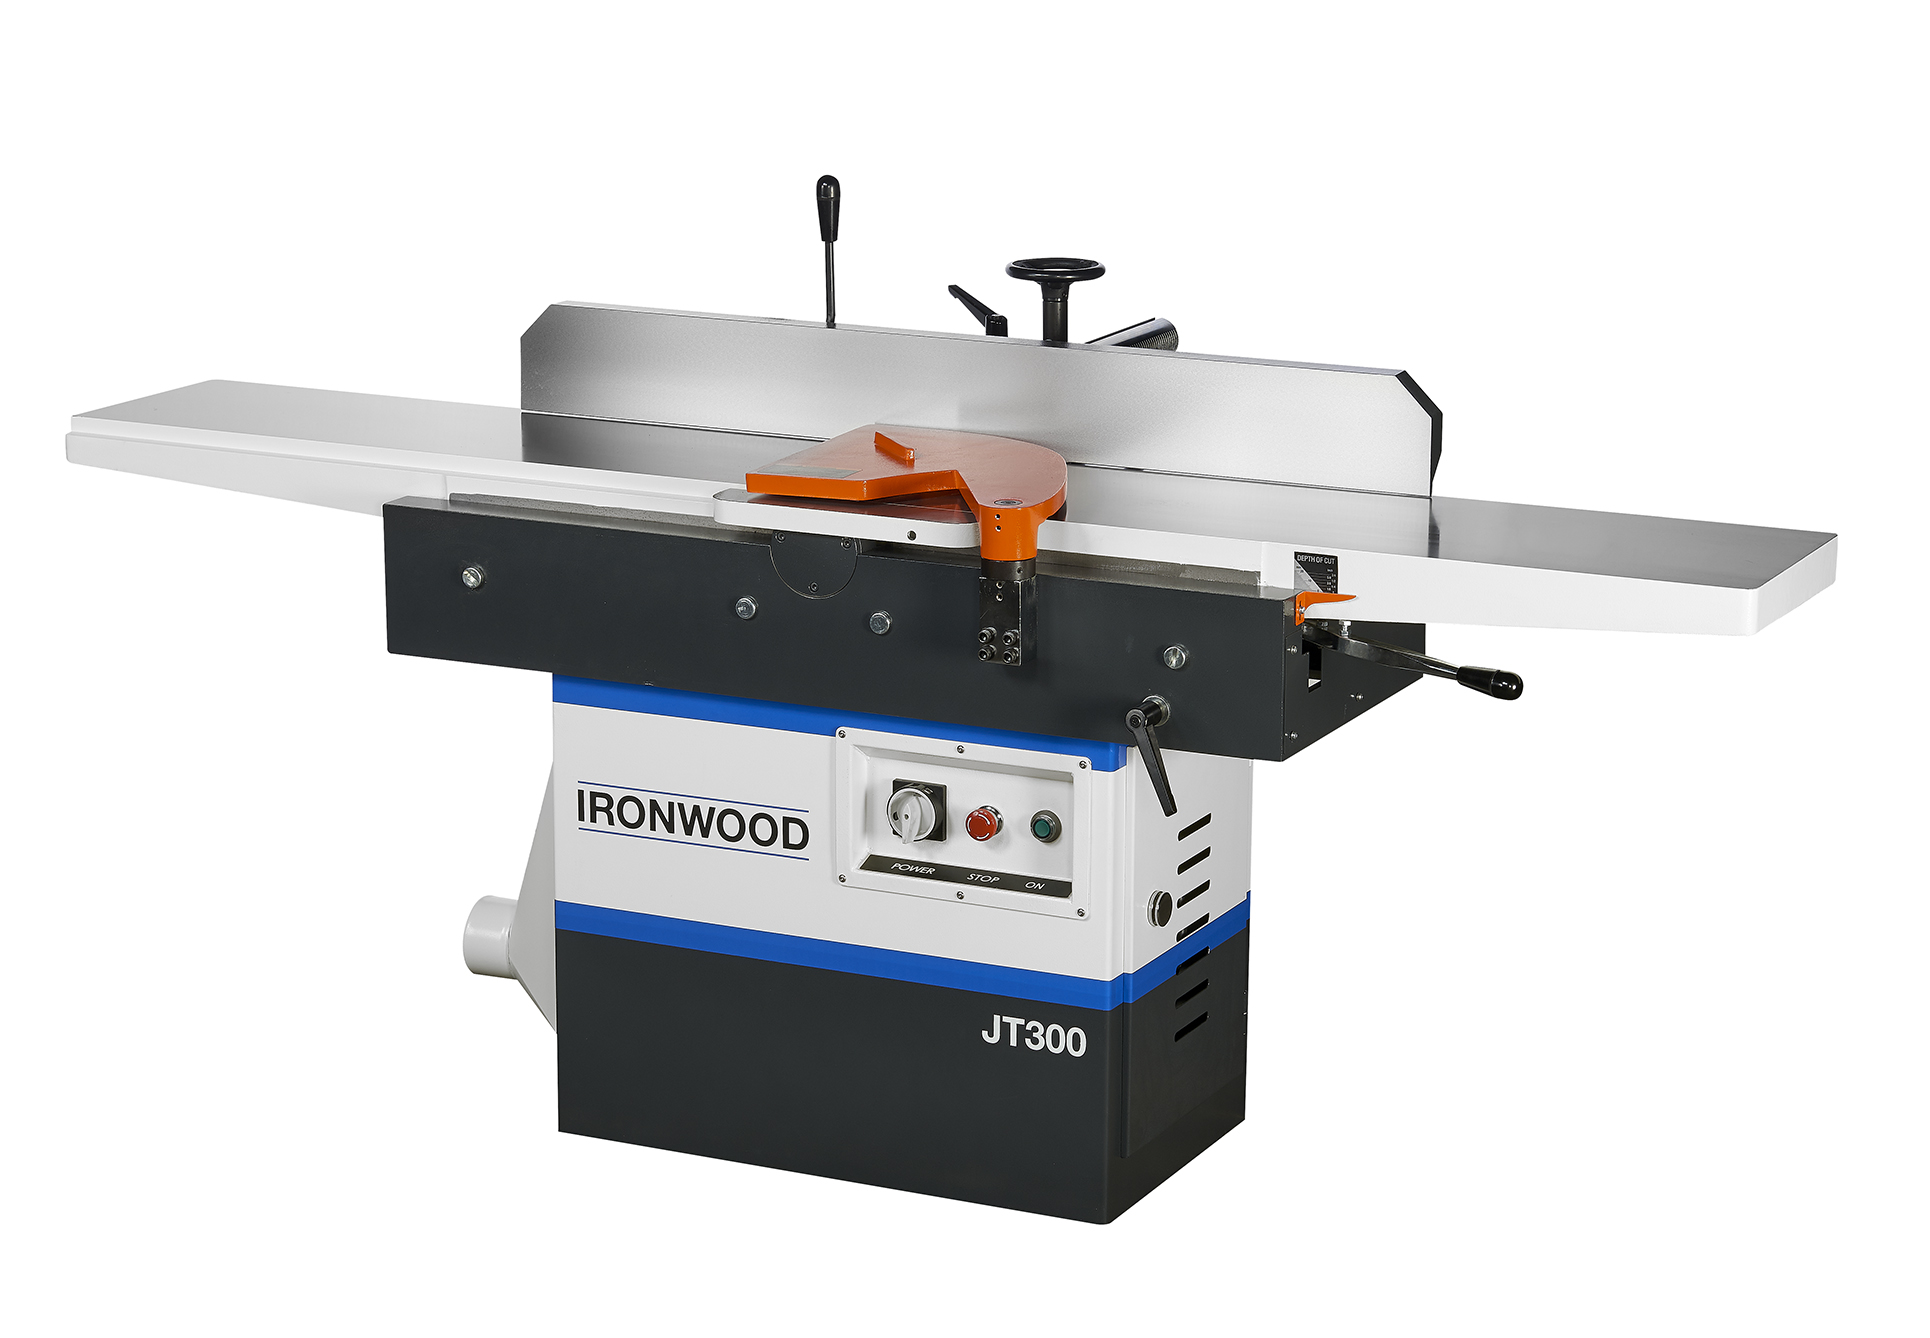 Stiles Machinery Ironwood 230V 12” Jointer JT300 at Elite Metal Tools